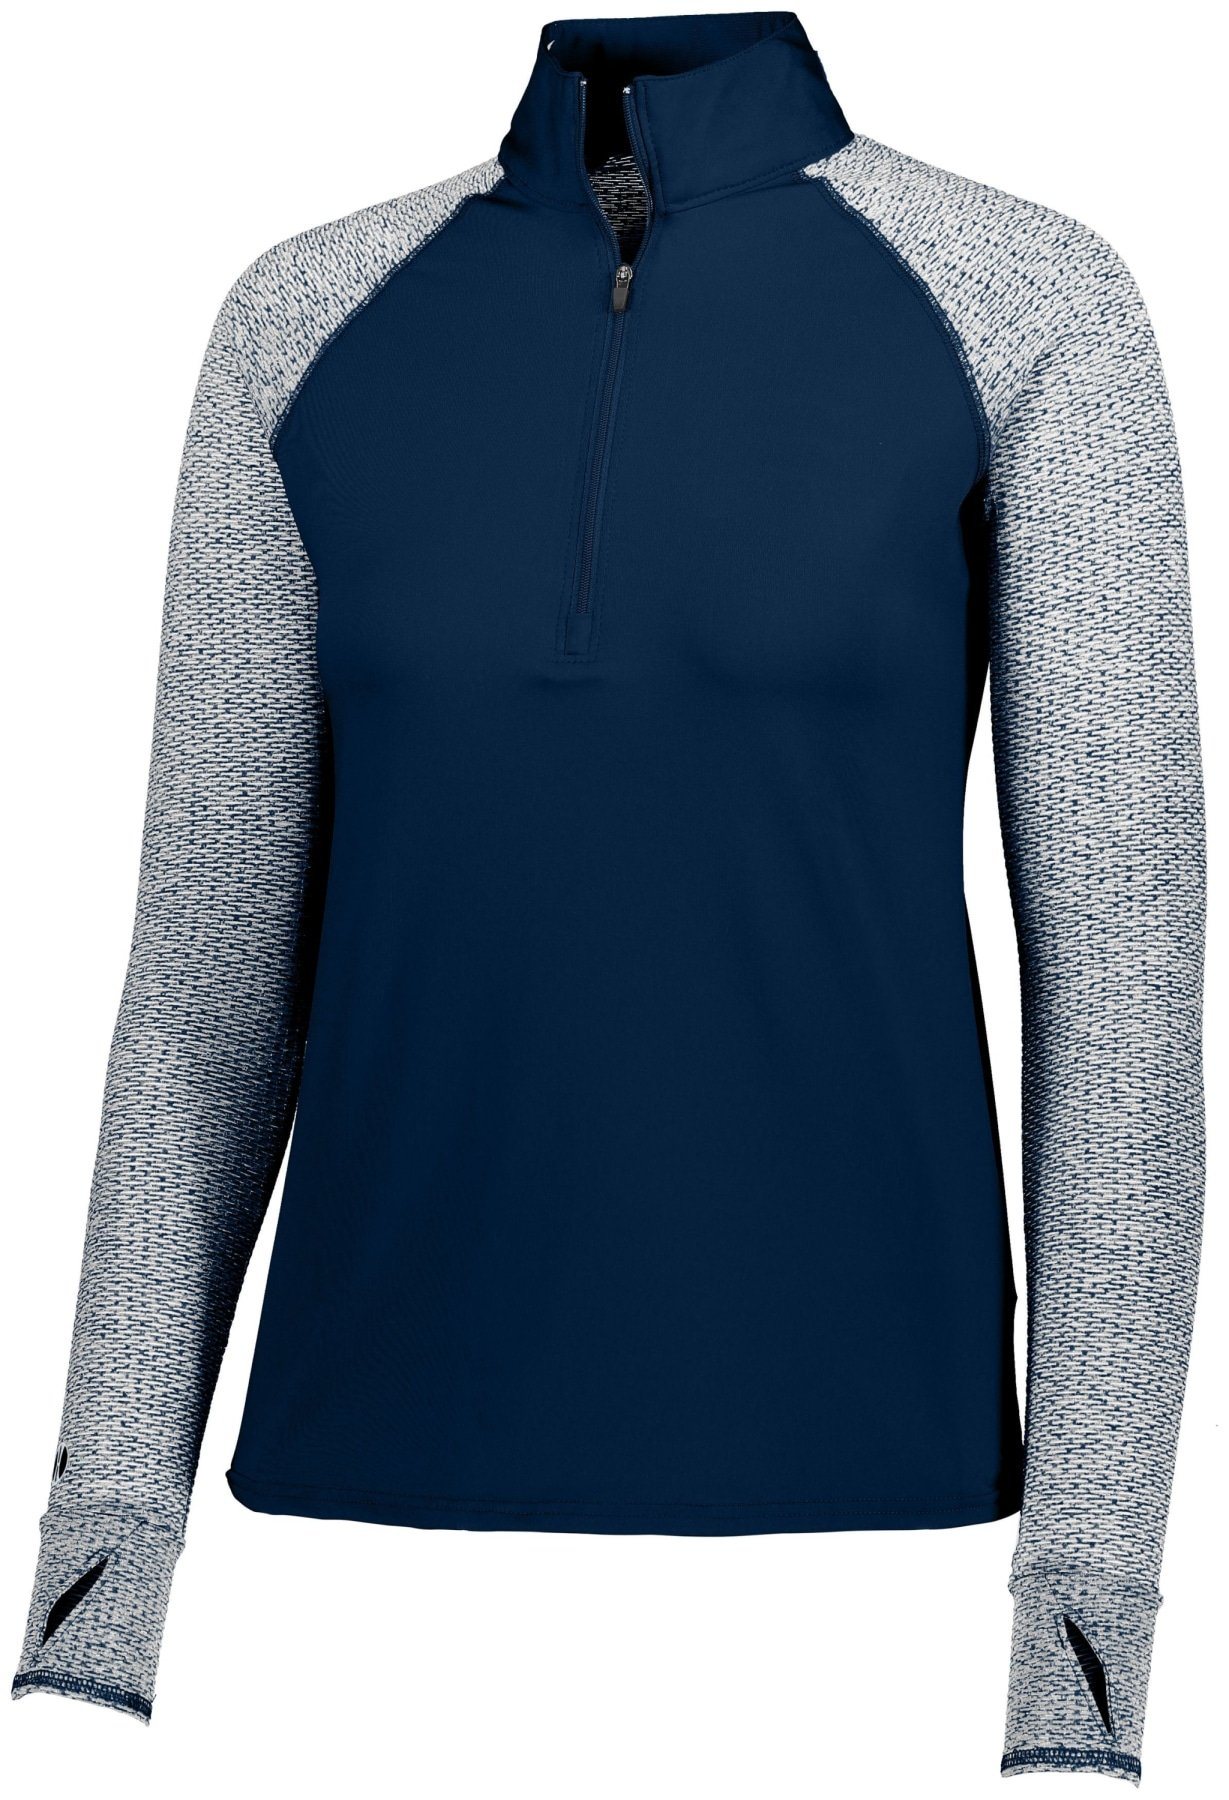 Ladies Athletic Shirt, Long Sleeve Axis 1/2 Zip Pullover 43